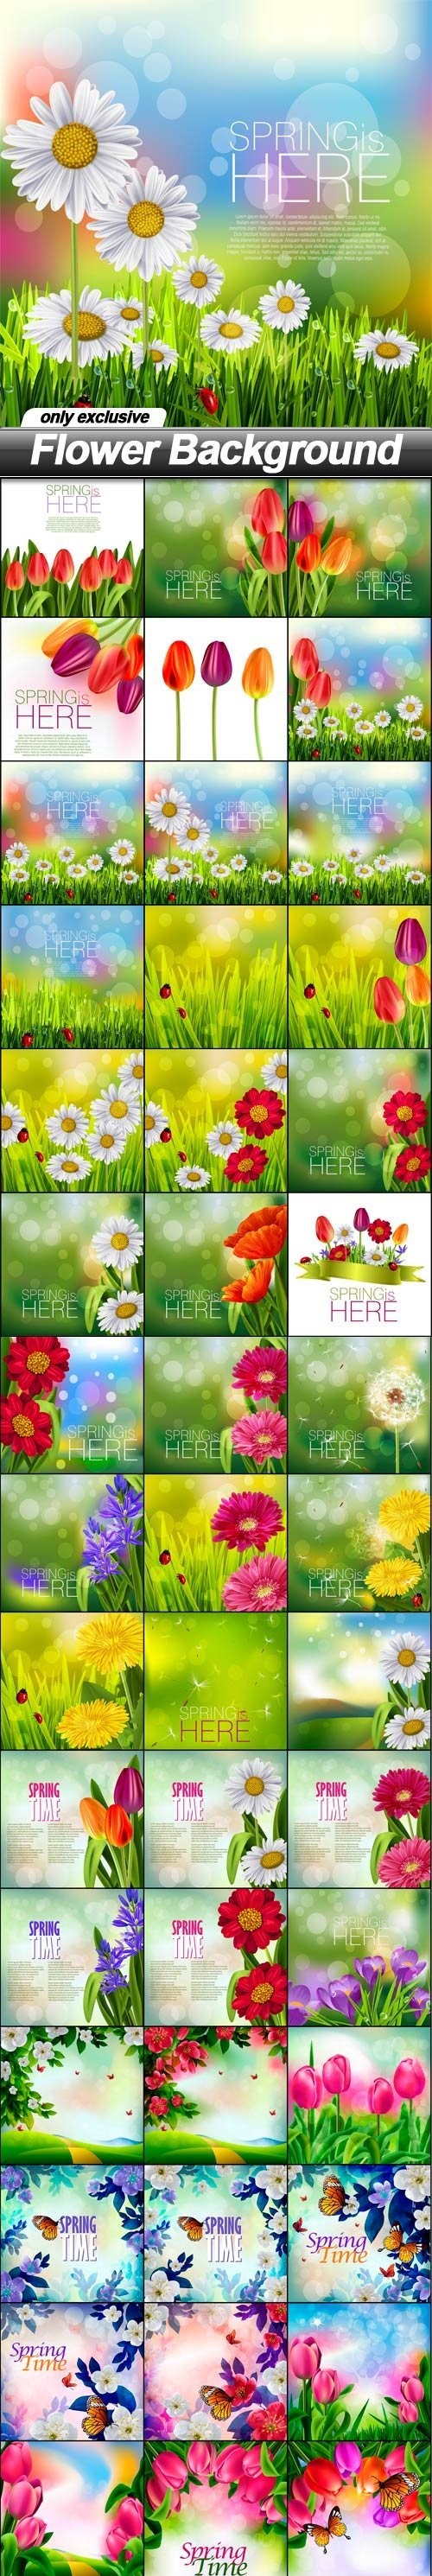 Flower Background - 48 EPS